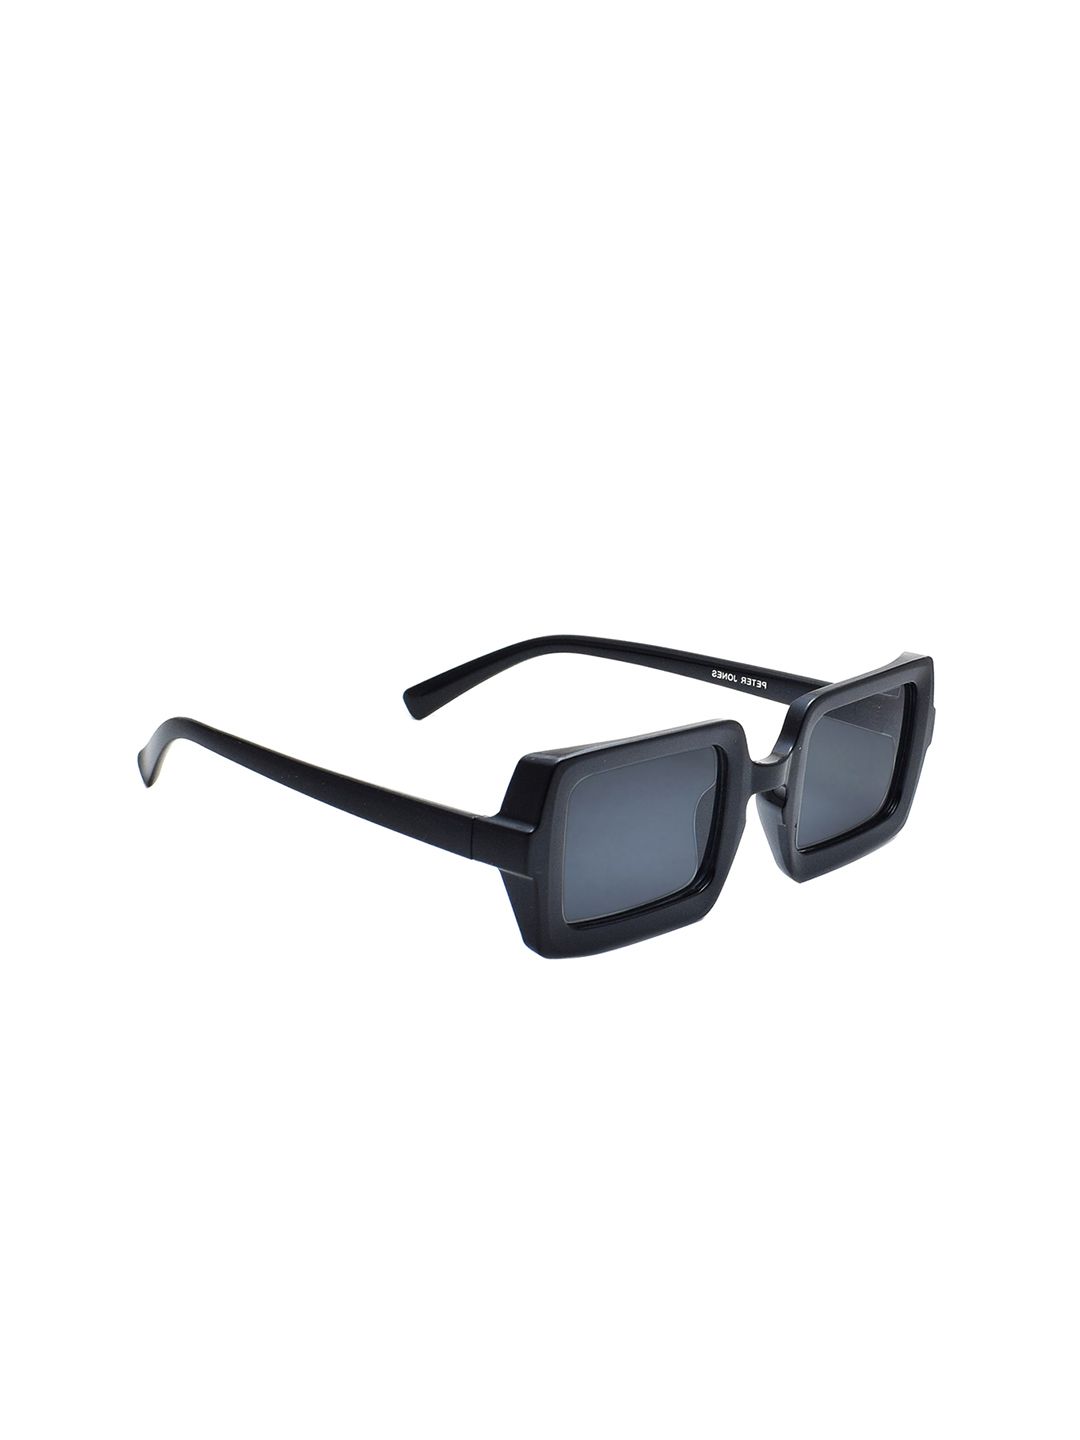 Peter Jones Eyewear Unisex Black Lens & Black Rectangle Sunglasses with UV Protected Lens Price in India